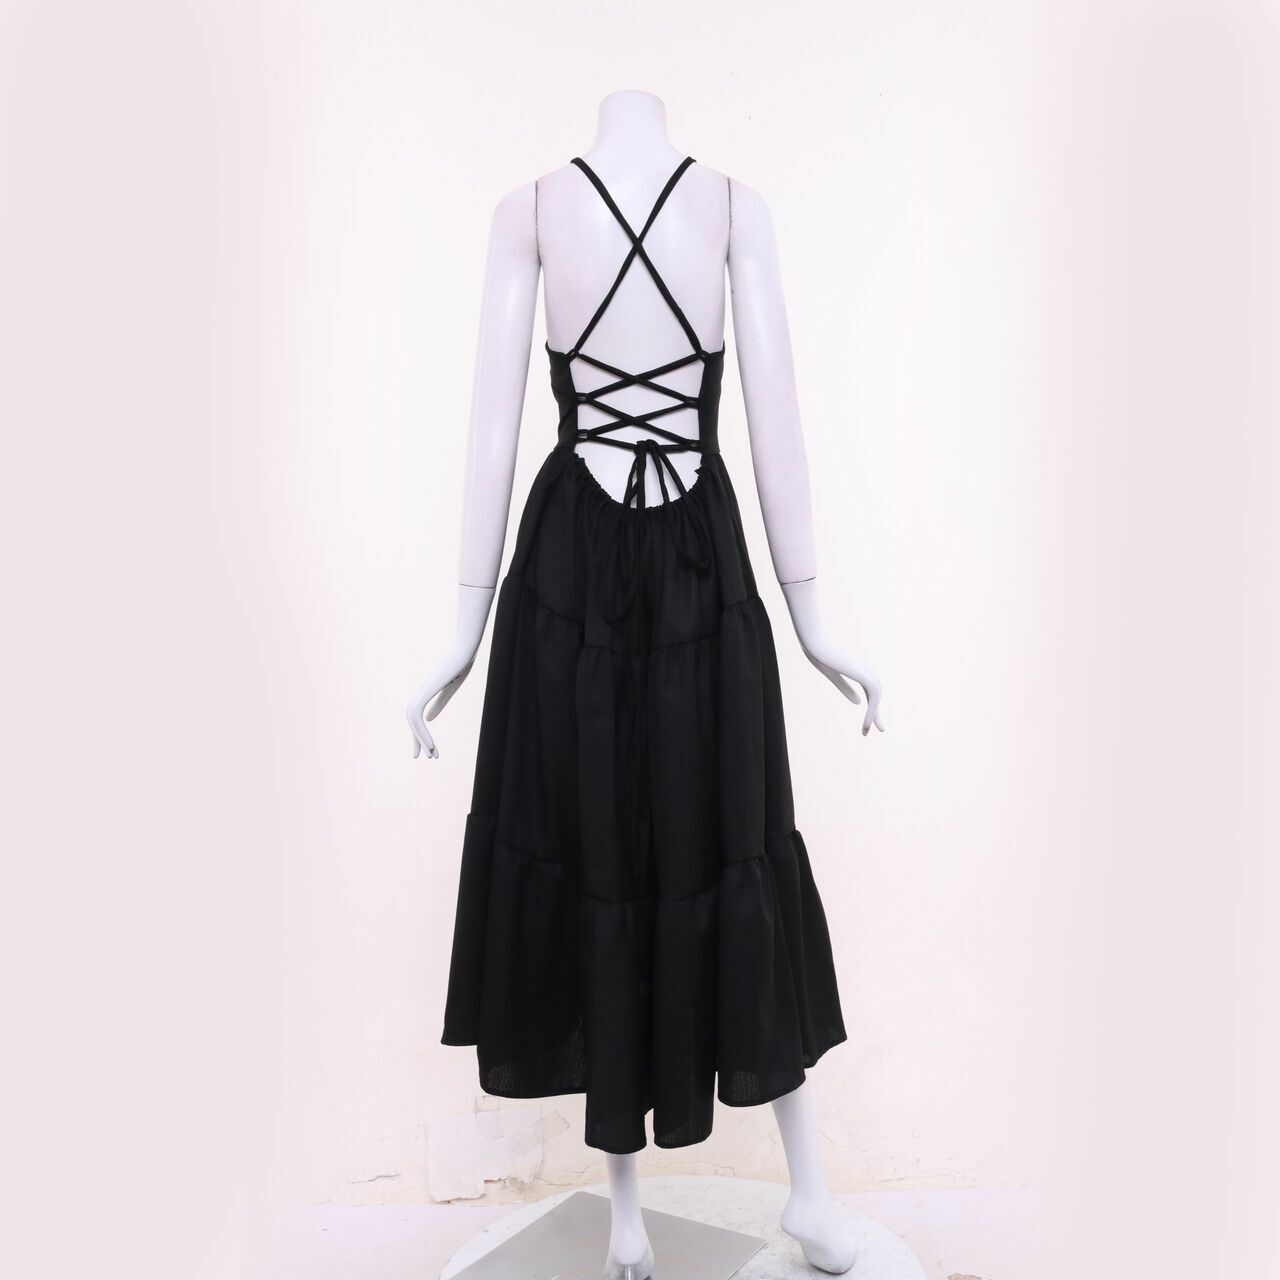 With Love x Anya Black Midi Dress